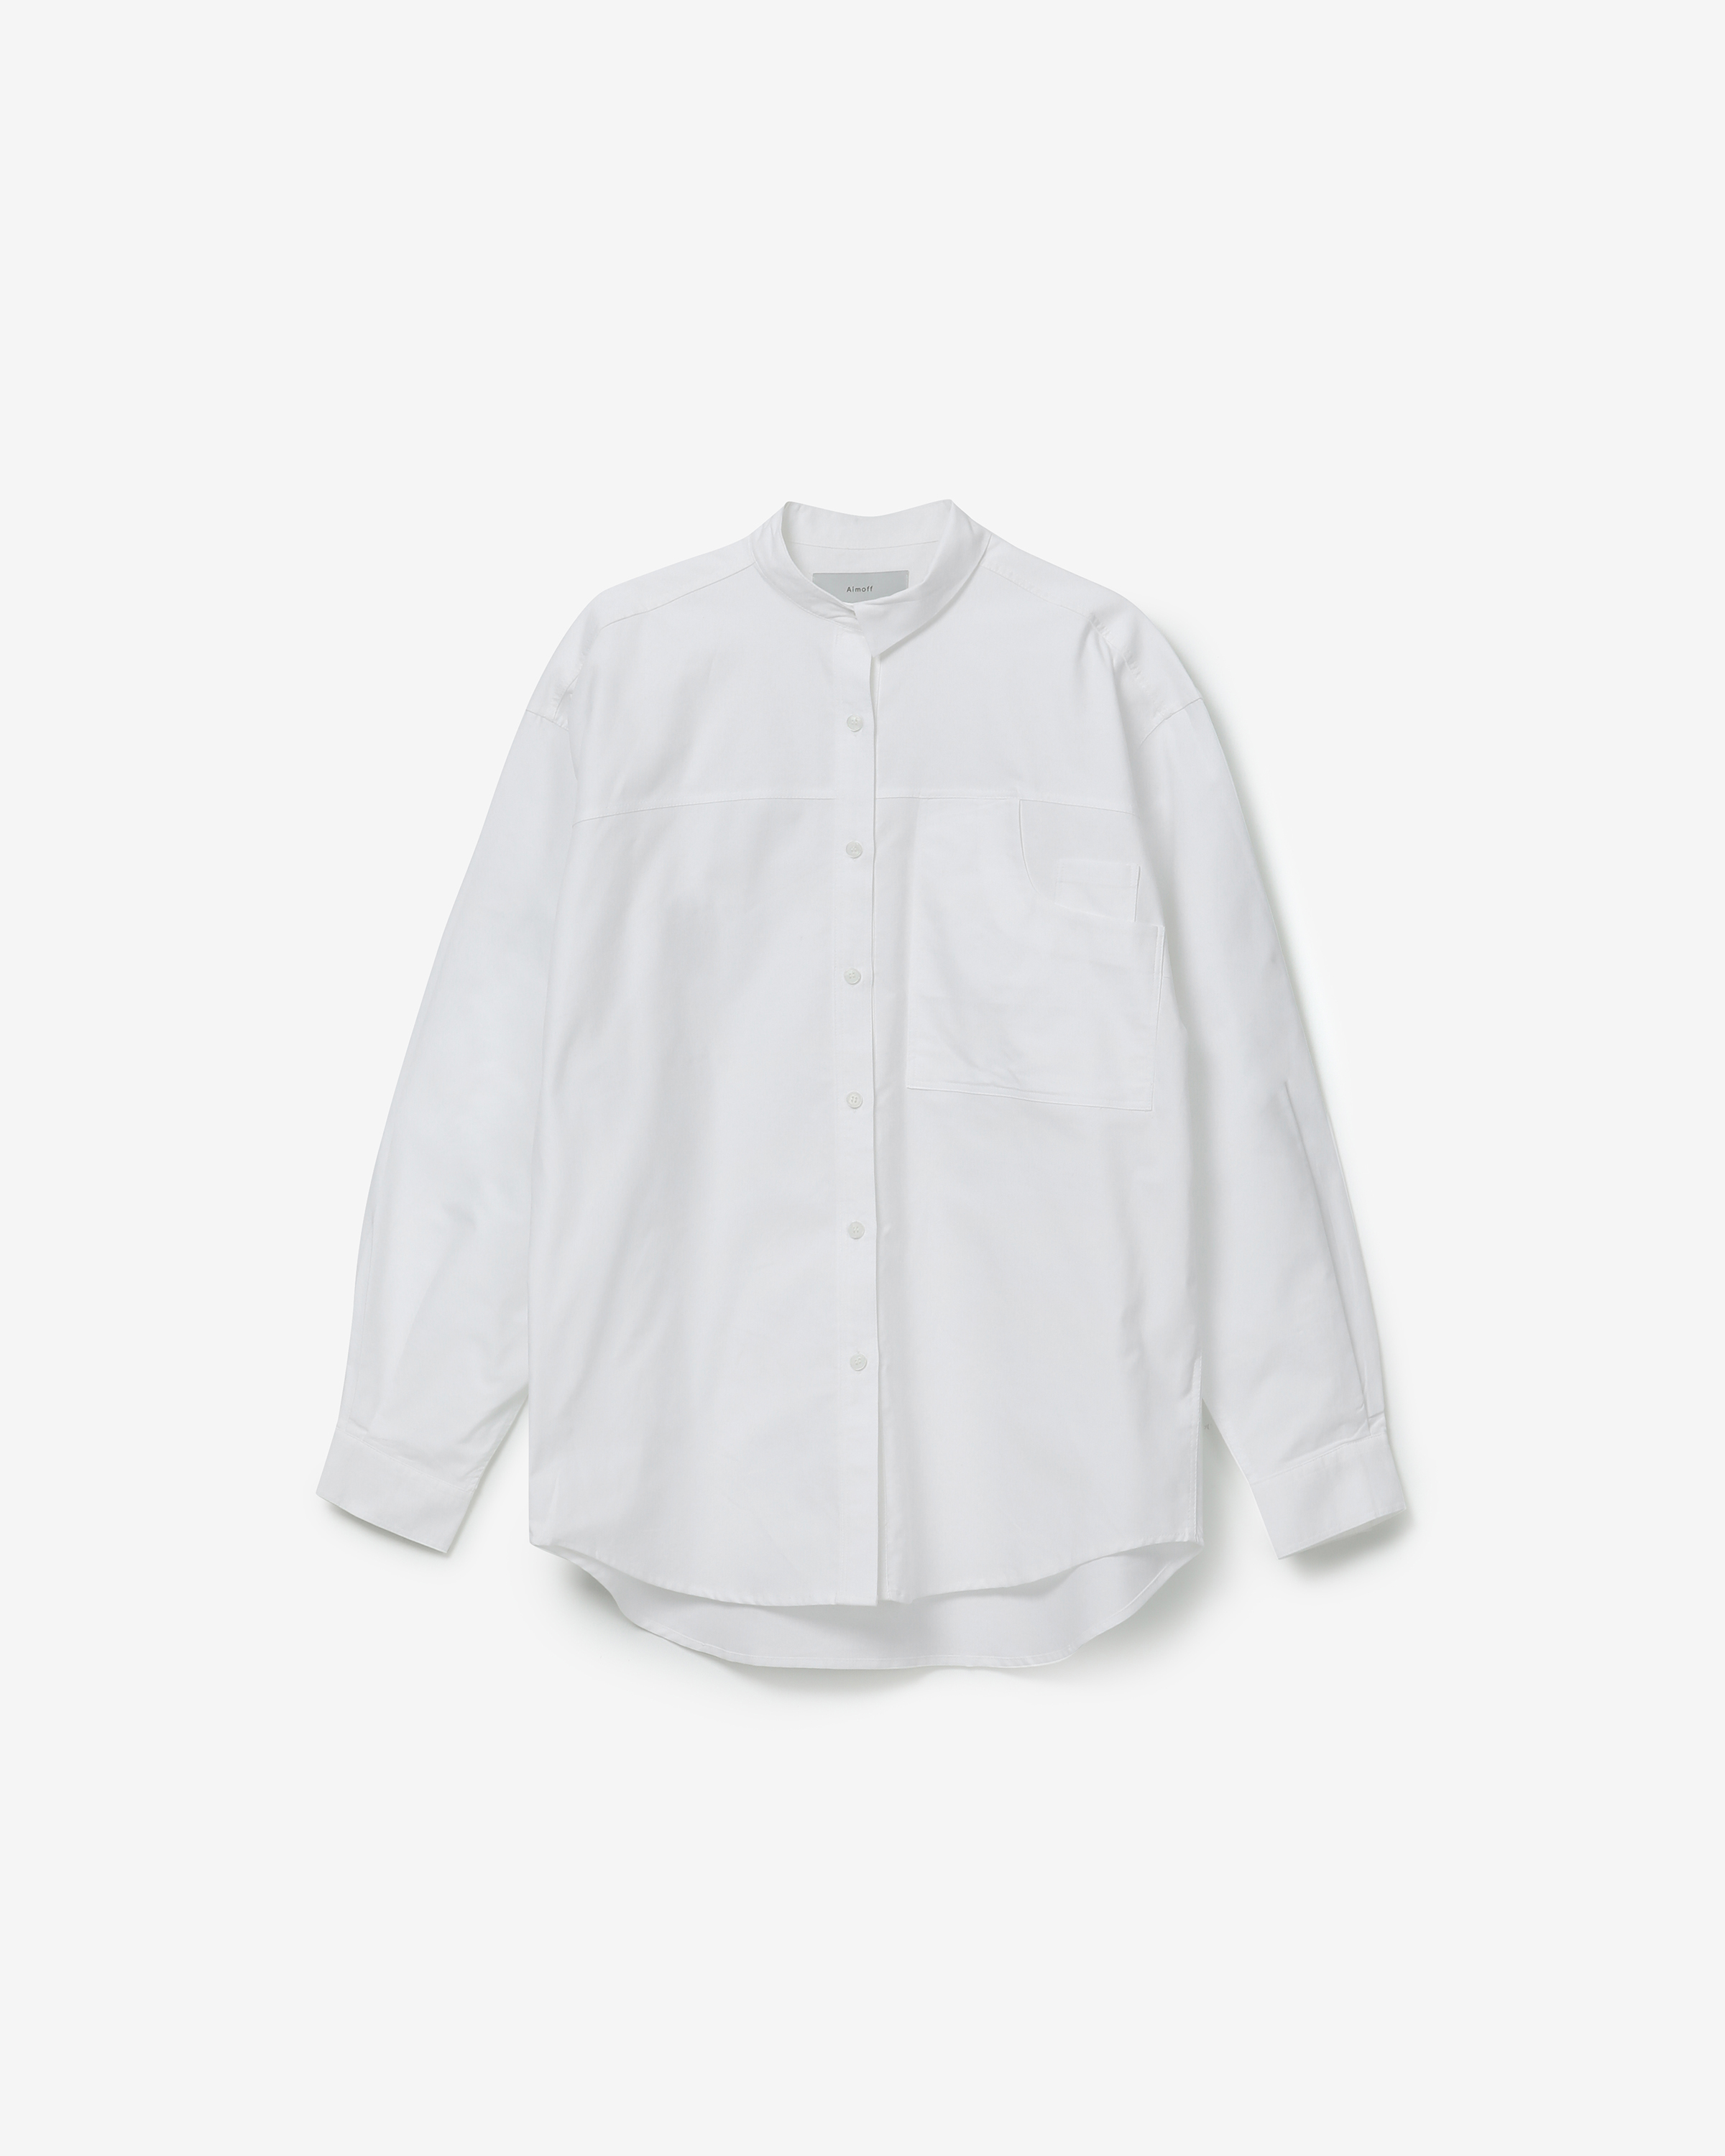 Oxpord drop tie shirts [ white ]